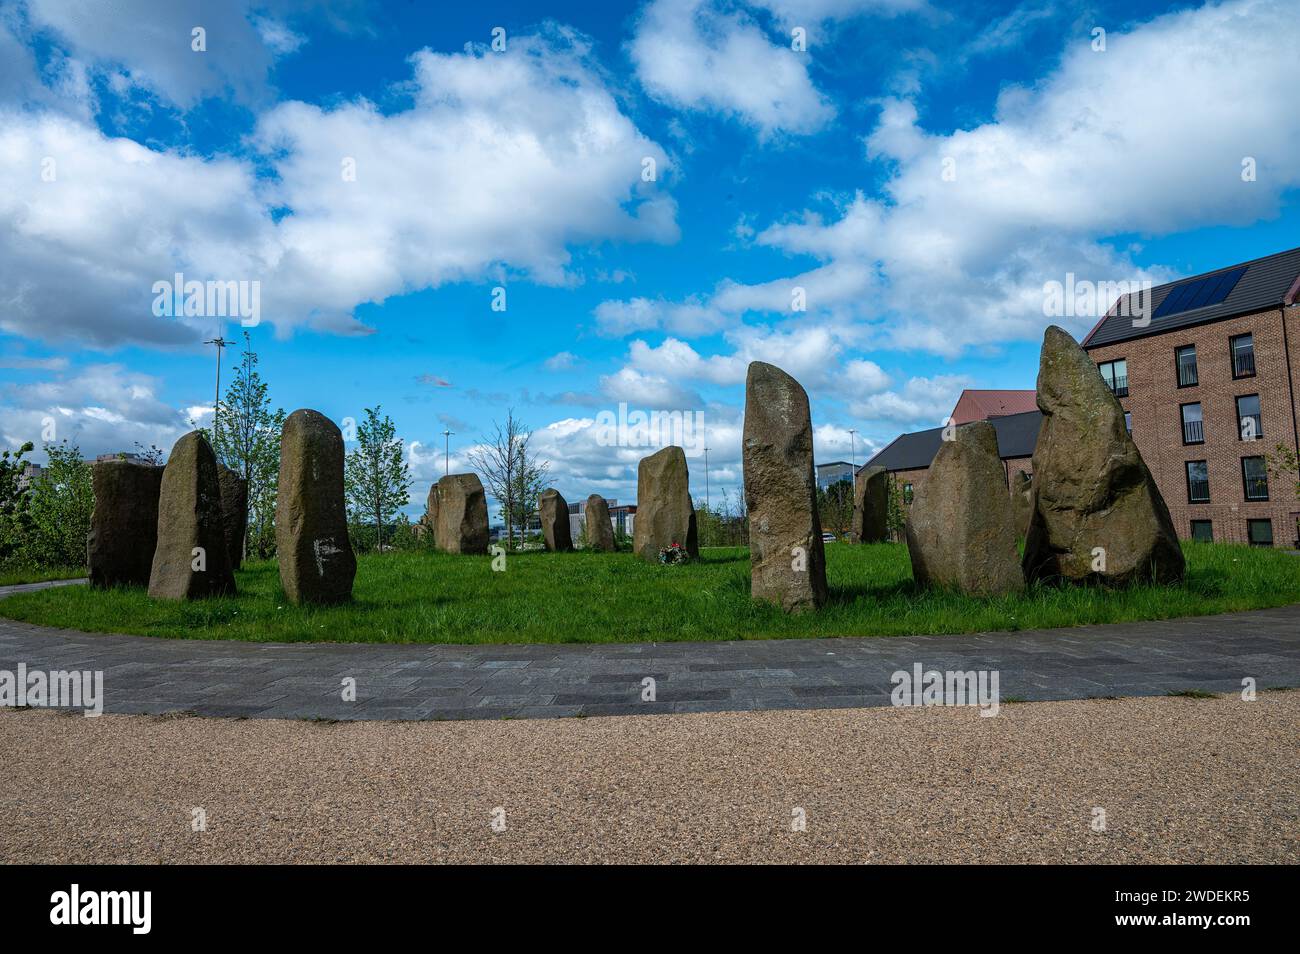 Relocalise Sighhill Stone Circle Magalith à Glasgow, en Écosse. Banque D'Images